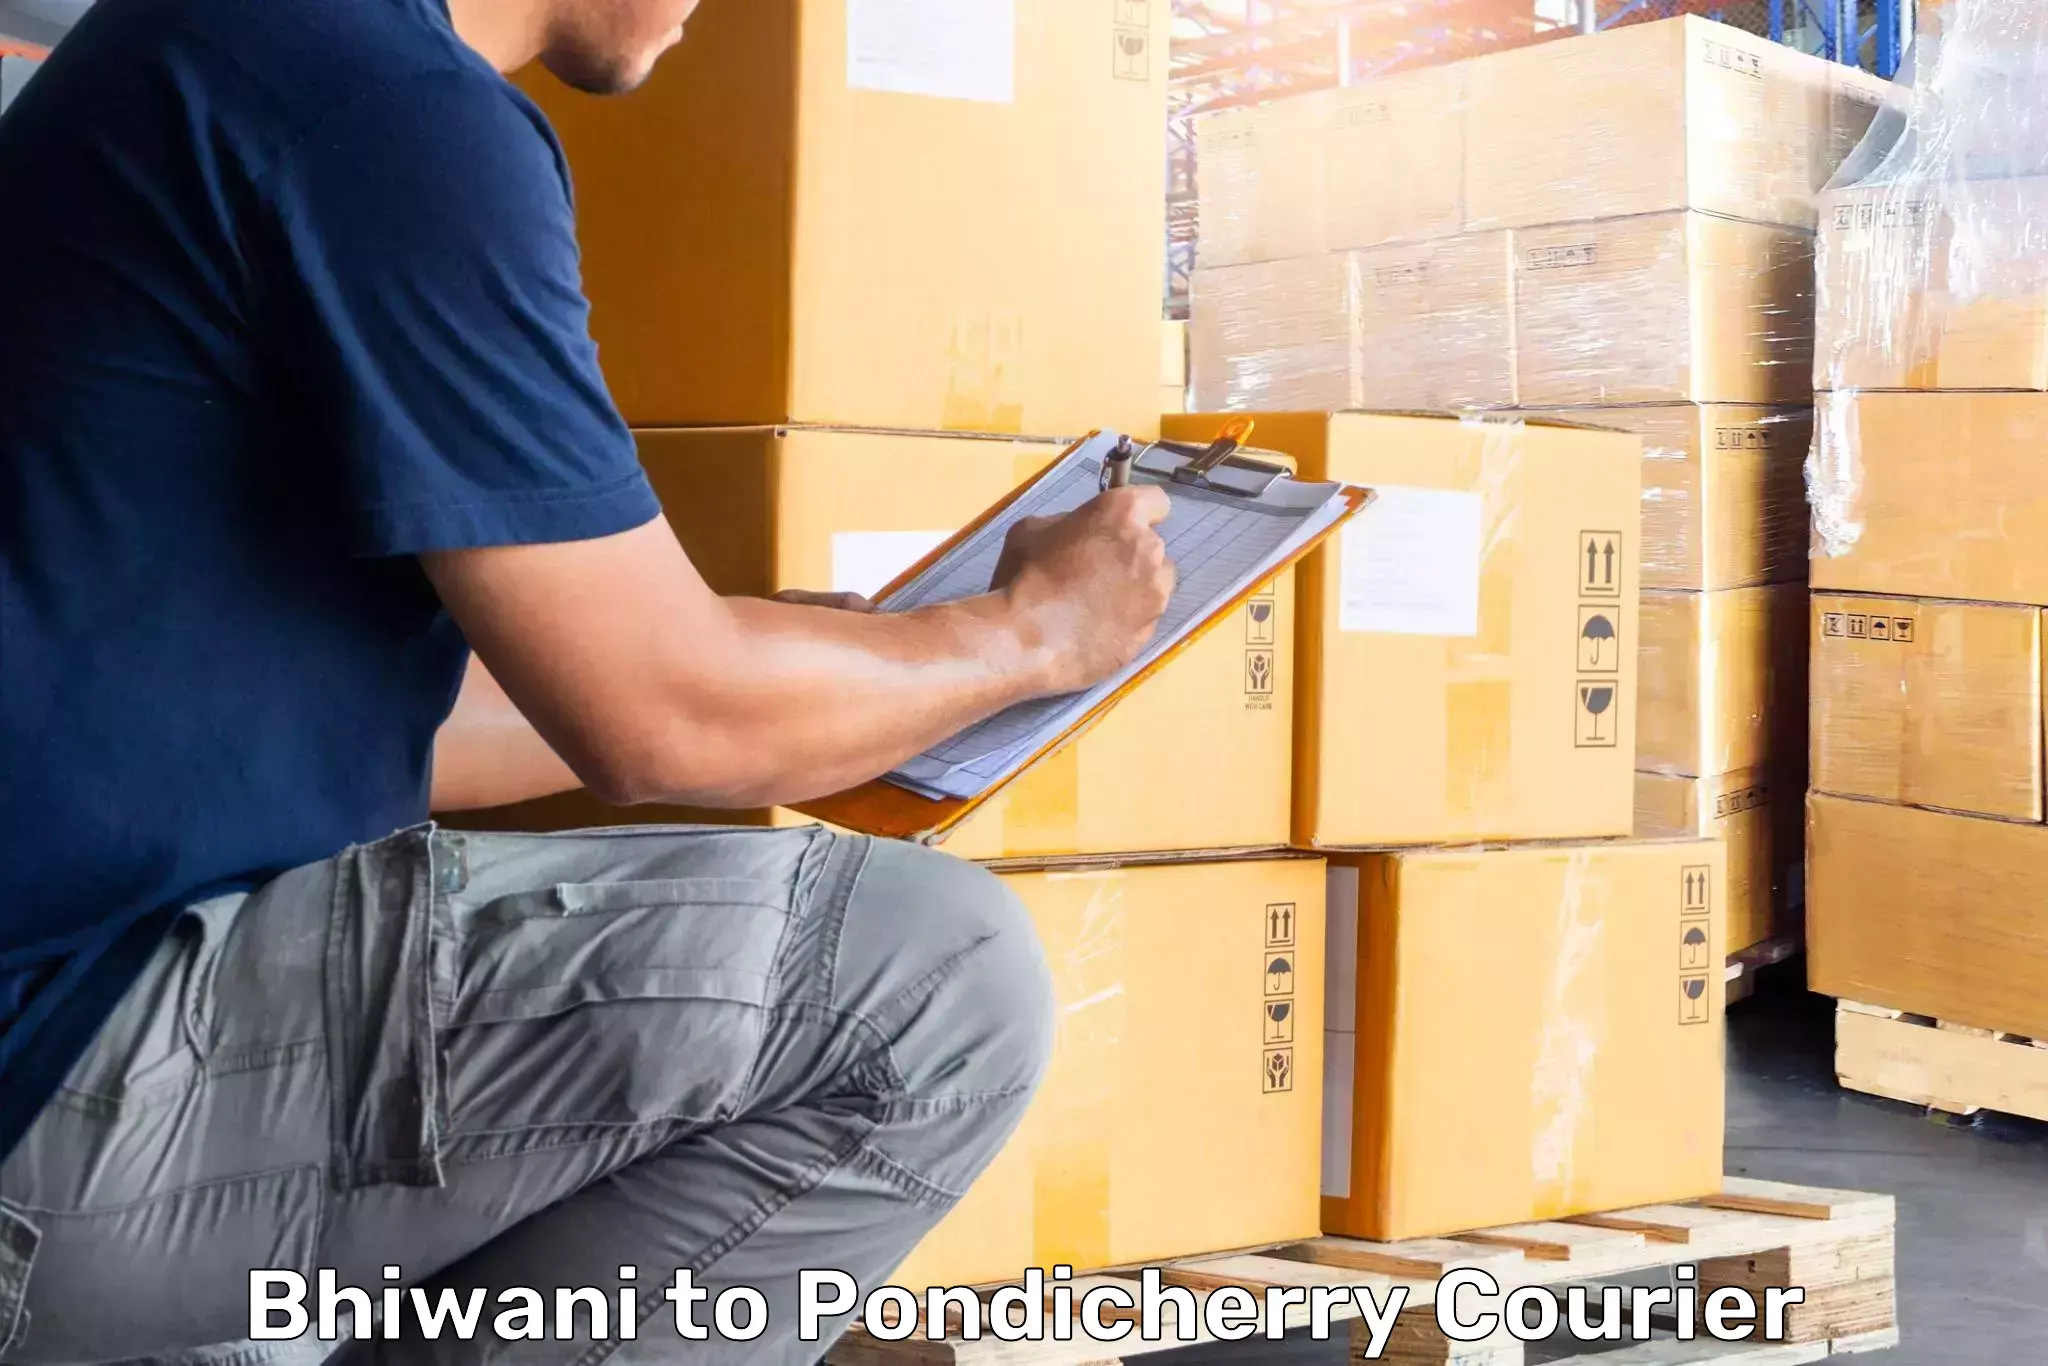 Luggage shipment specialists Bhiwani to Pondicherry